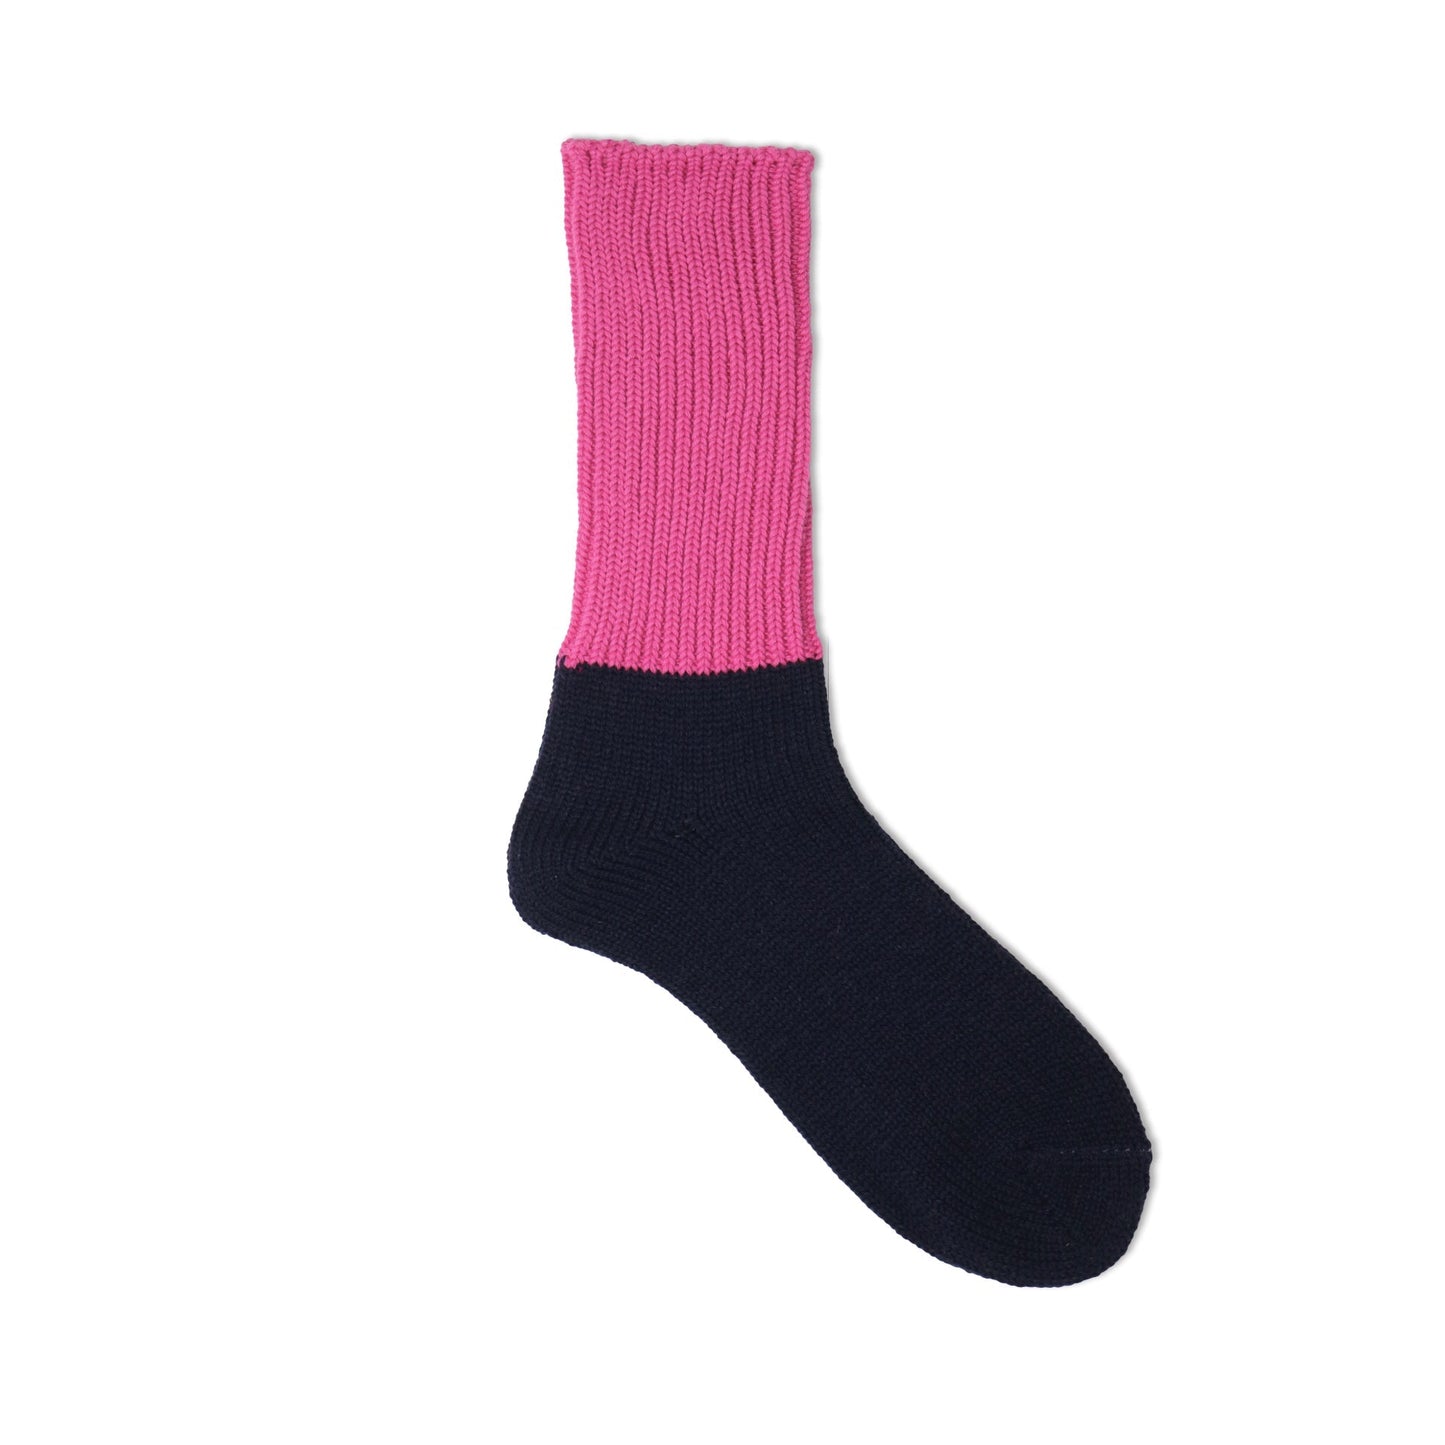 decka decka cotton rib x washable wool socks (pink / navy)